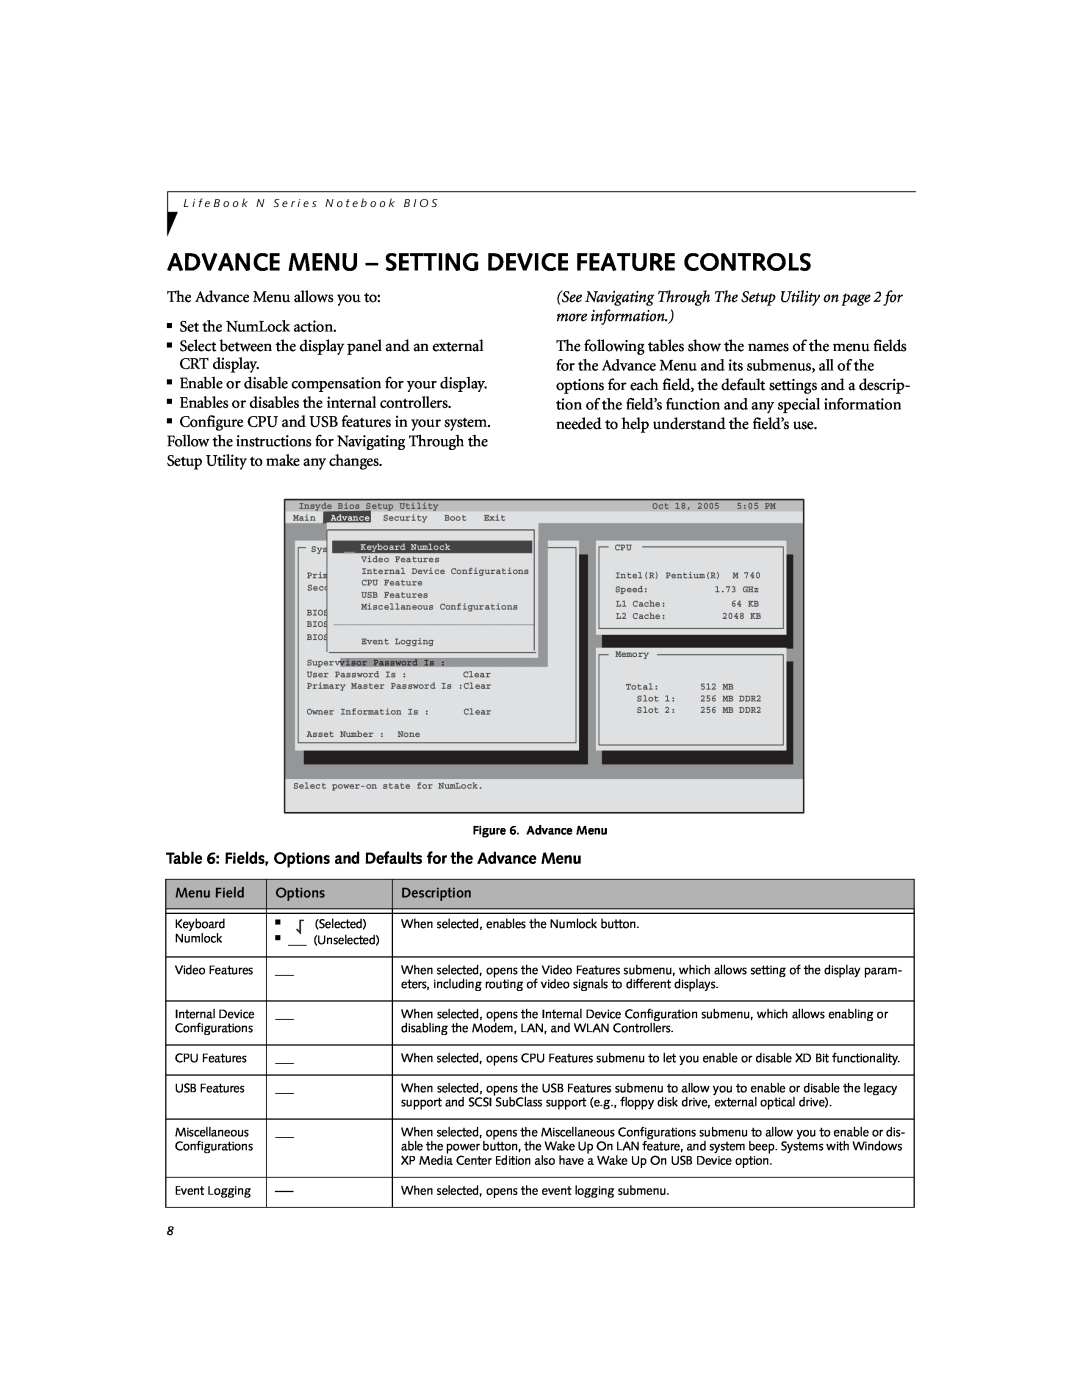 Fujitsu Siemens Computers N3520 manual Advance Menu - Setting Device Feature Controls, Menu Field, Options, Description 